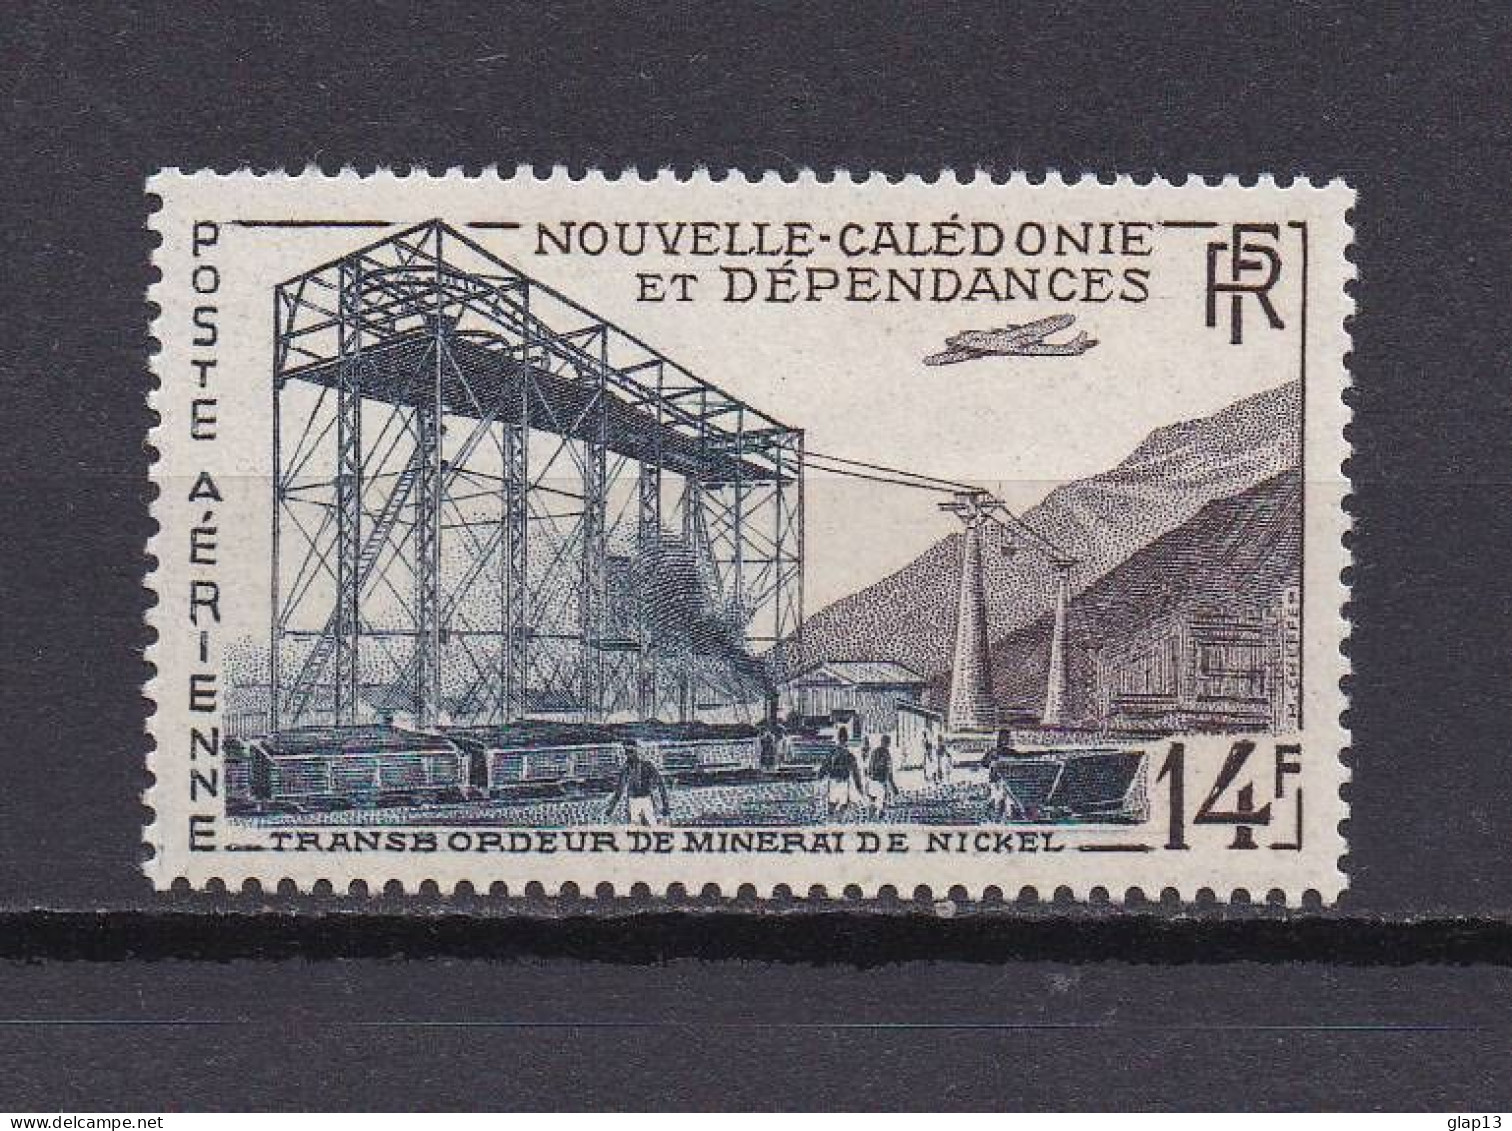 NOUVELLE-CALEDONIE 1955 PA N°66 NEUF AVEC CHARNIERE TRANSBORDEUR - Neufs